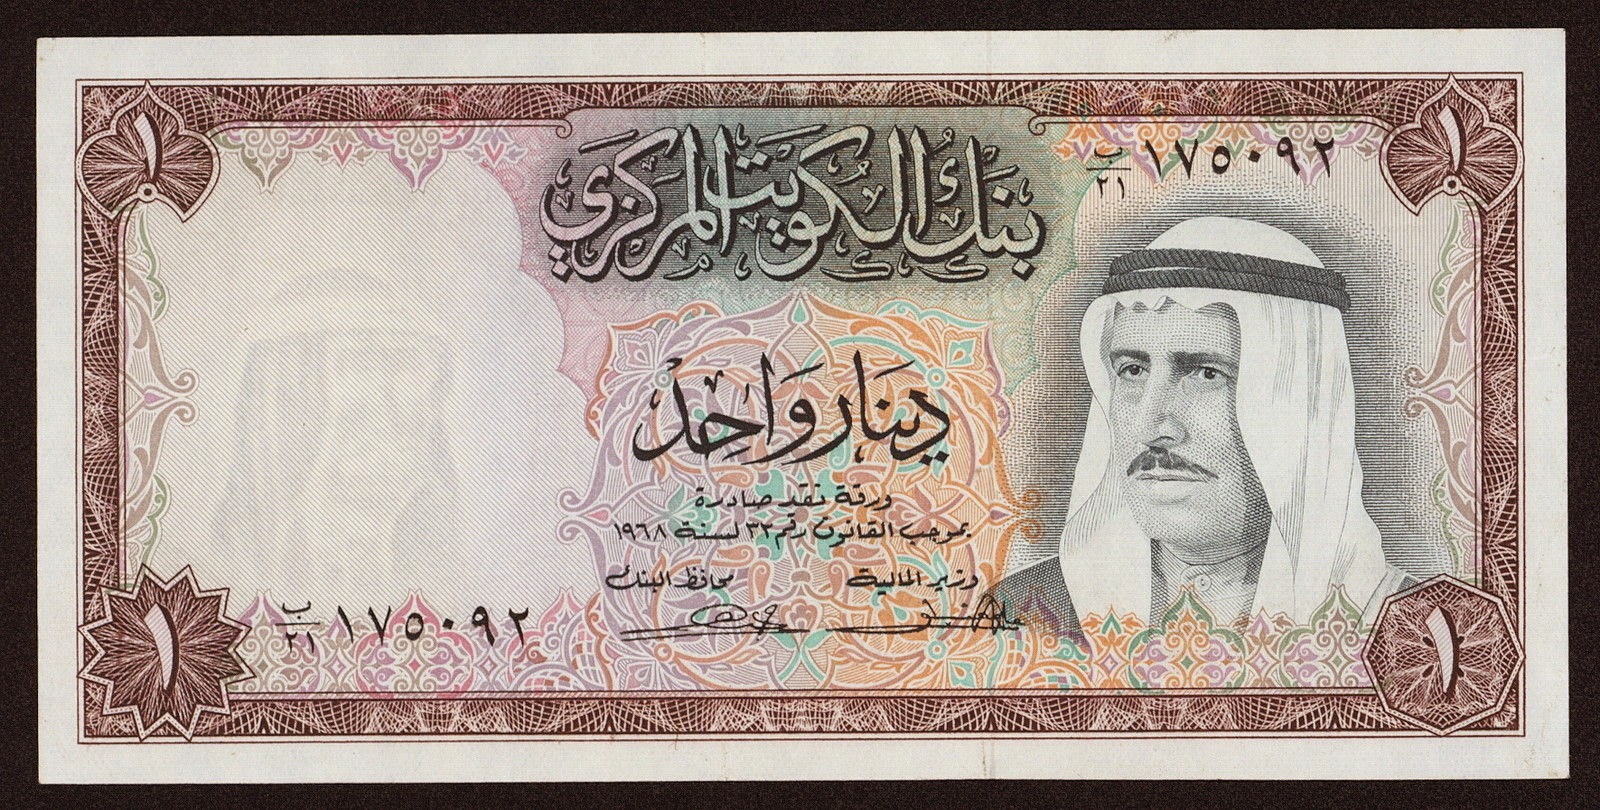 Kuwait Banknotes 1 Kuwaiti Dinar Note 1968 Sheikh Sabah Al-Salim Al-Sabah Emir of Kuwait